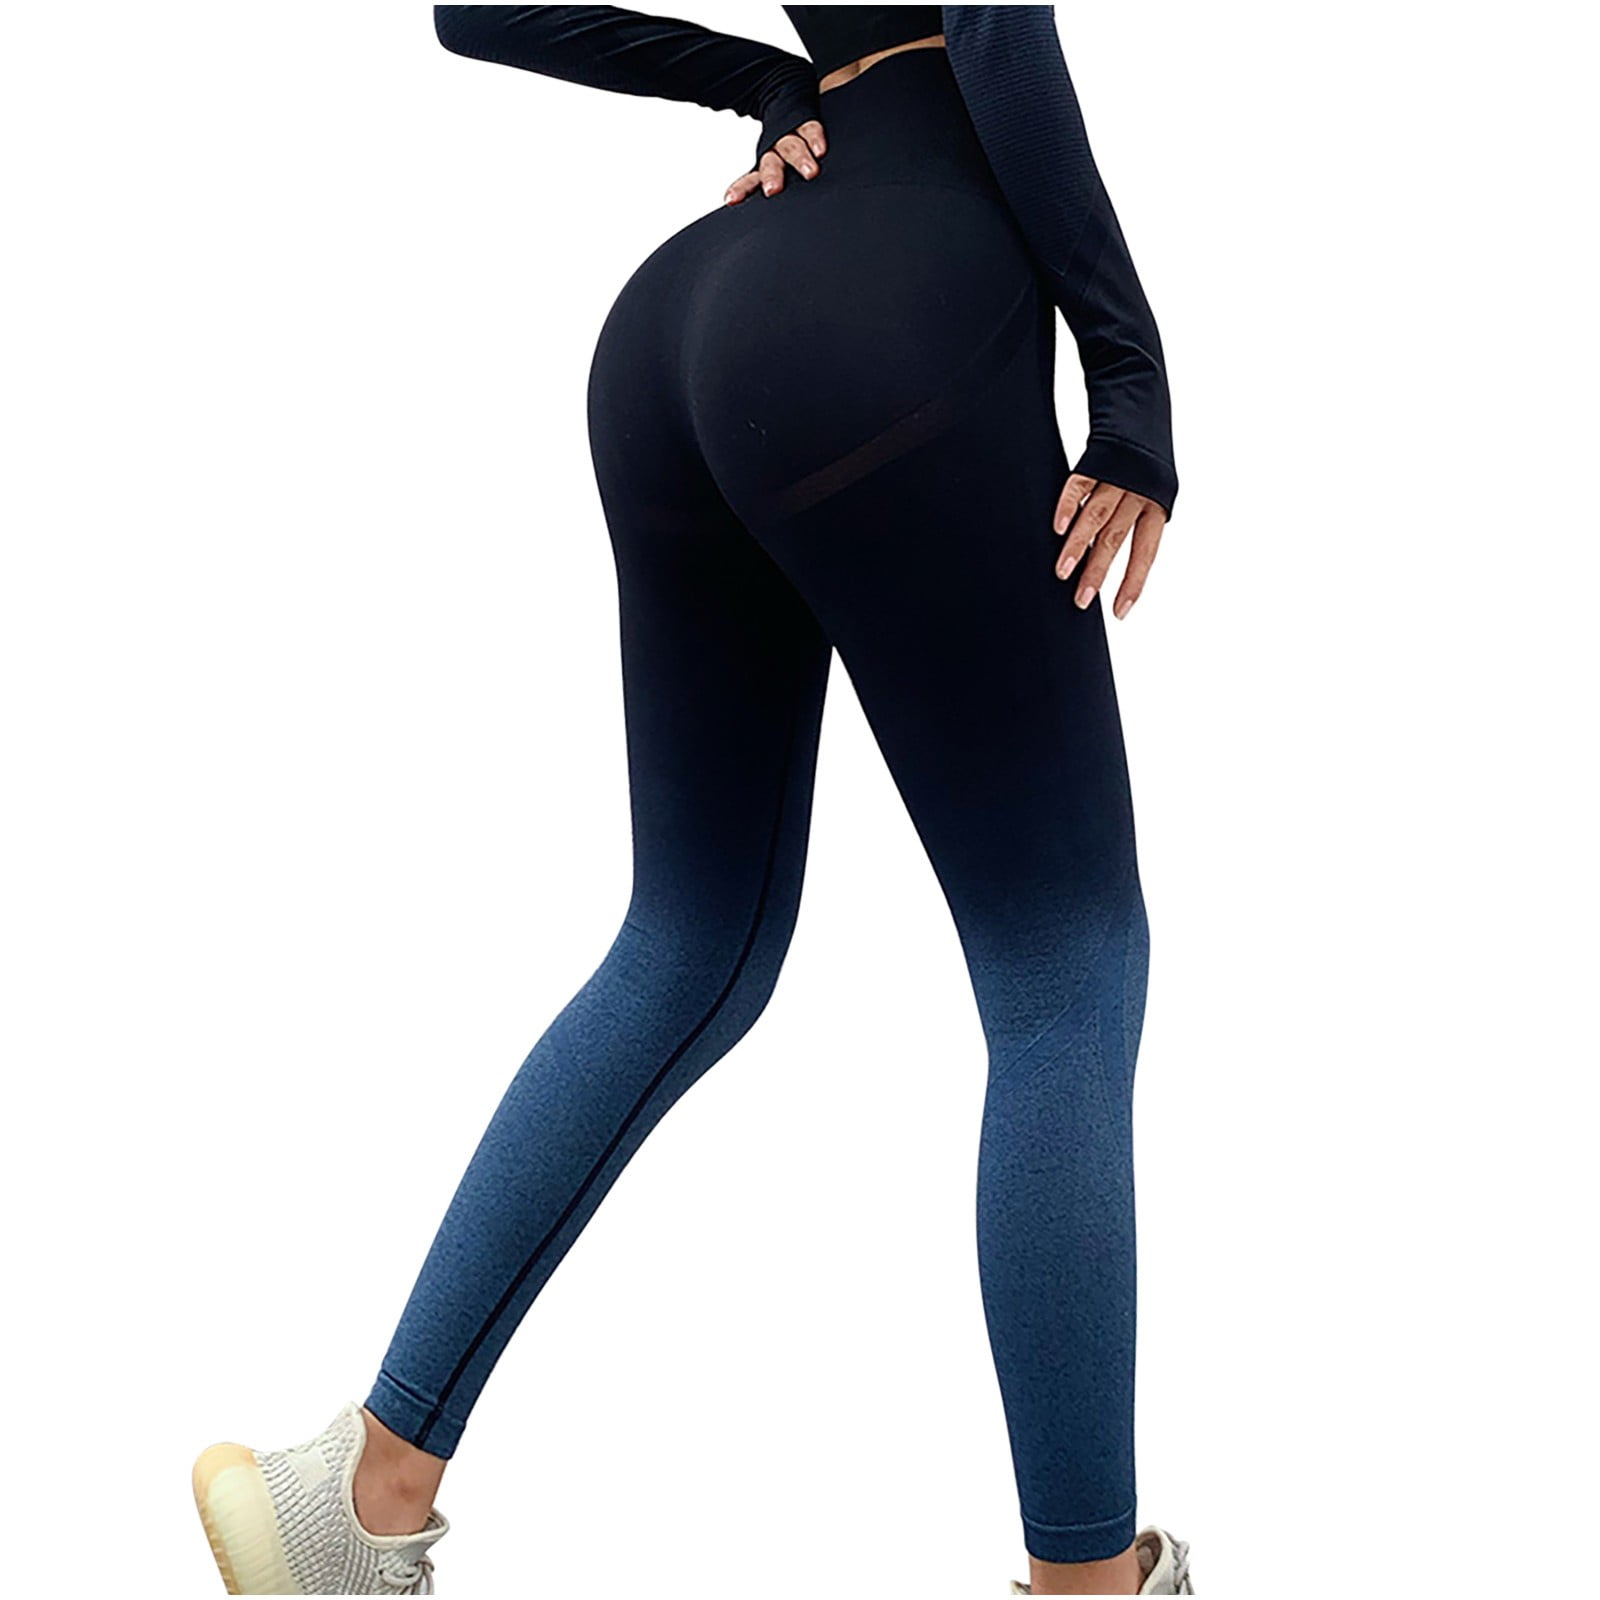 SMihono Clearance Yoga Pants for Women Sports Casual Yoga Full